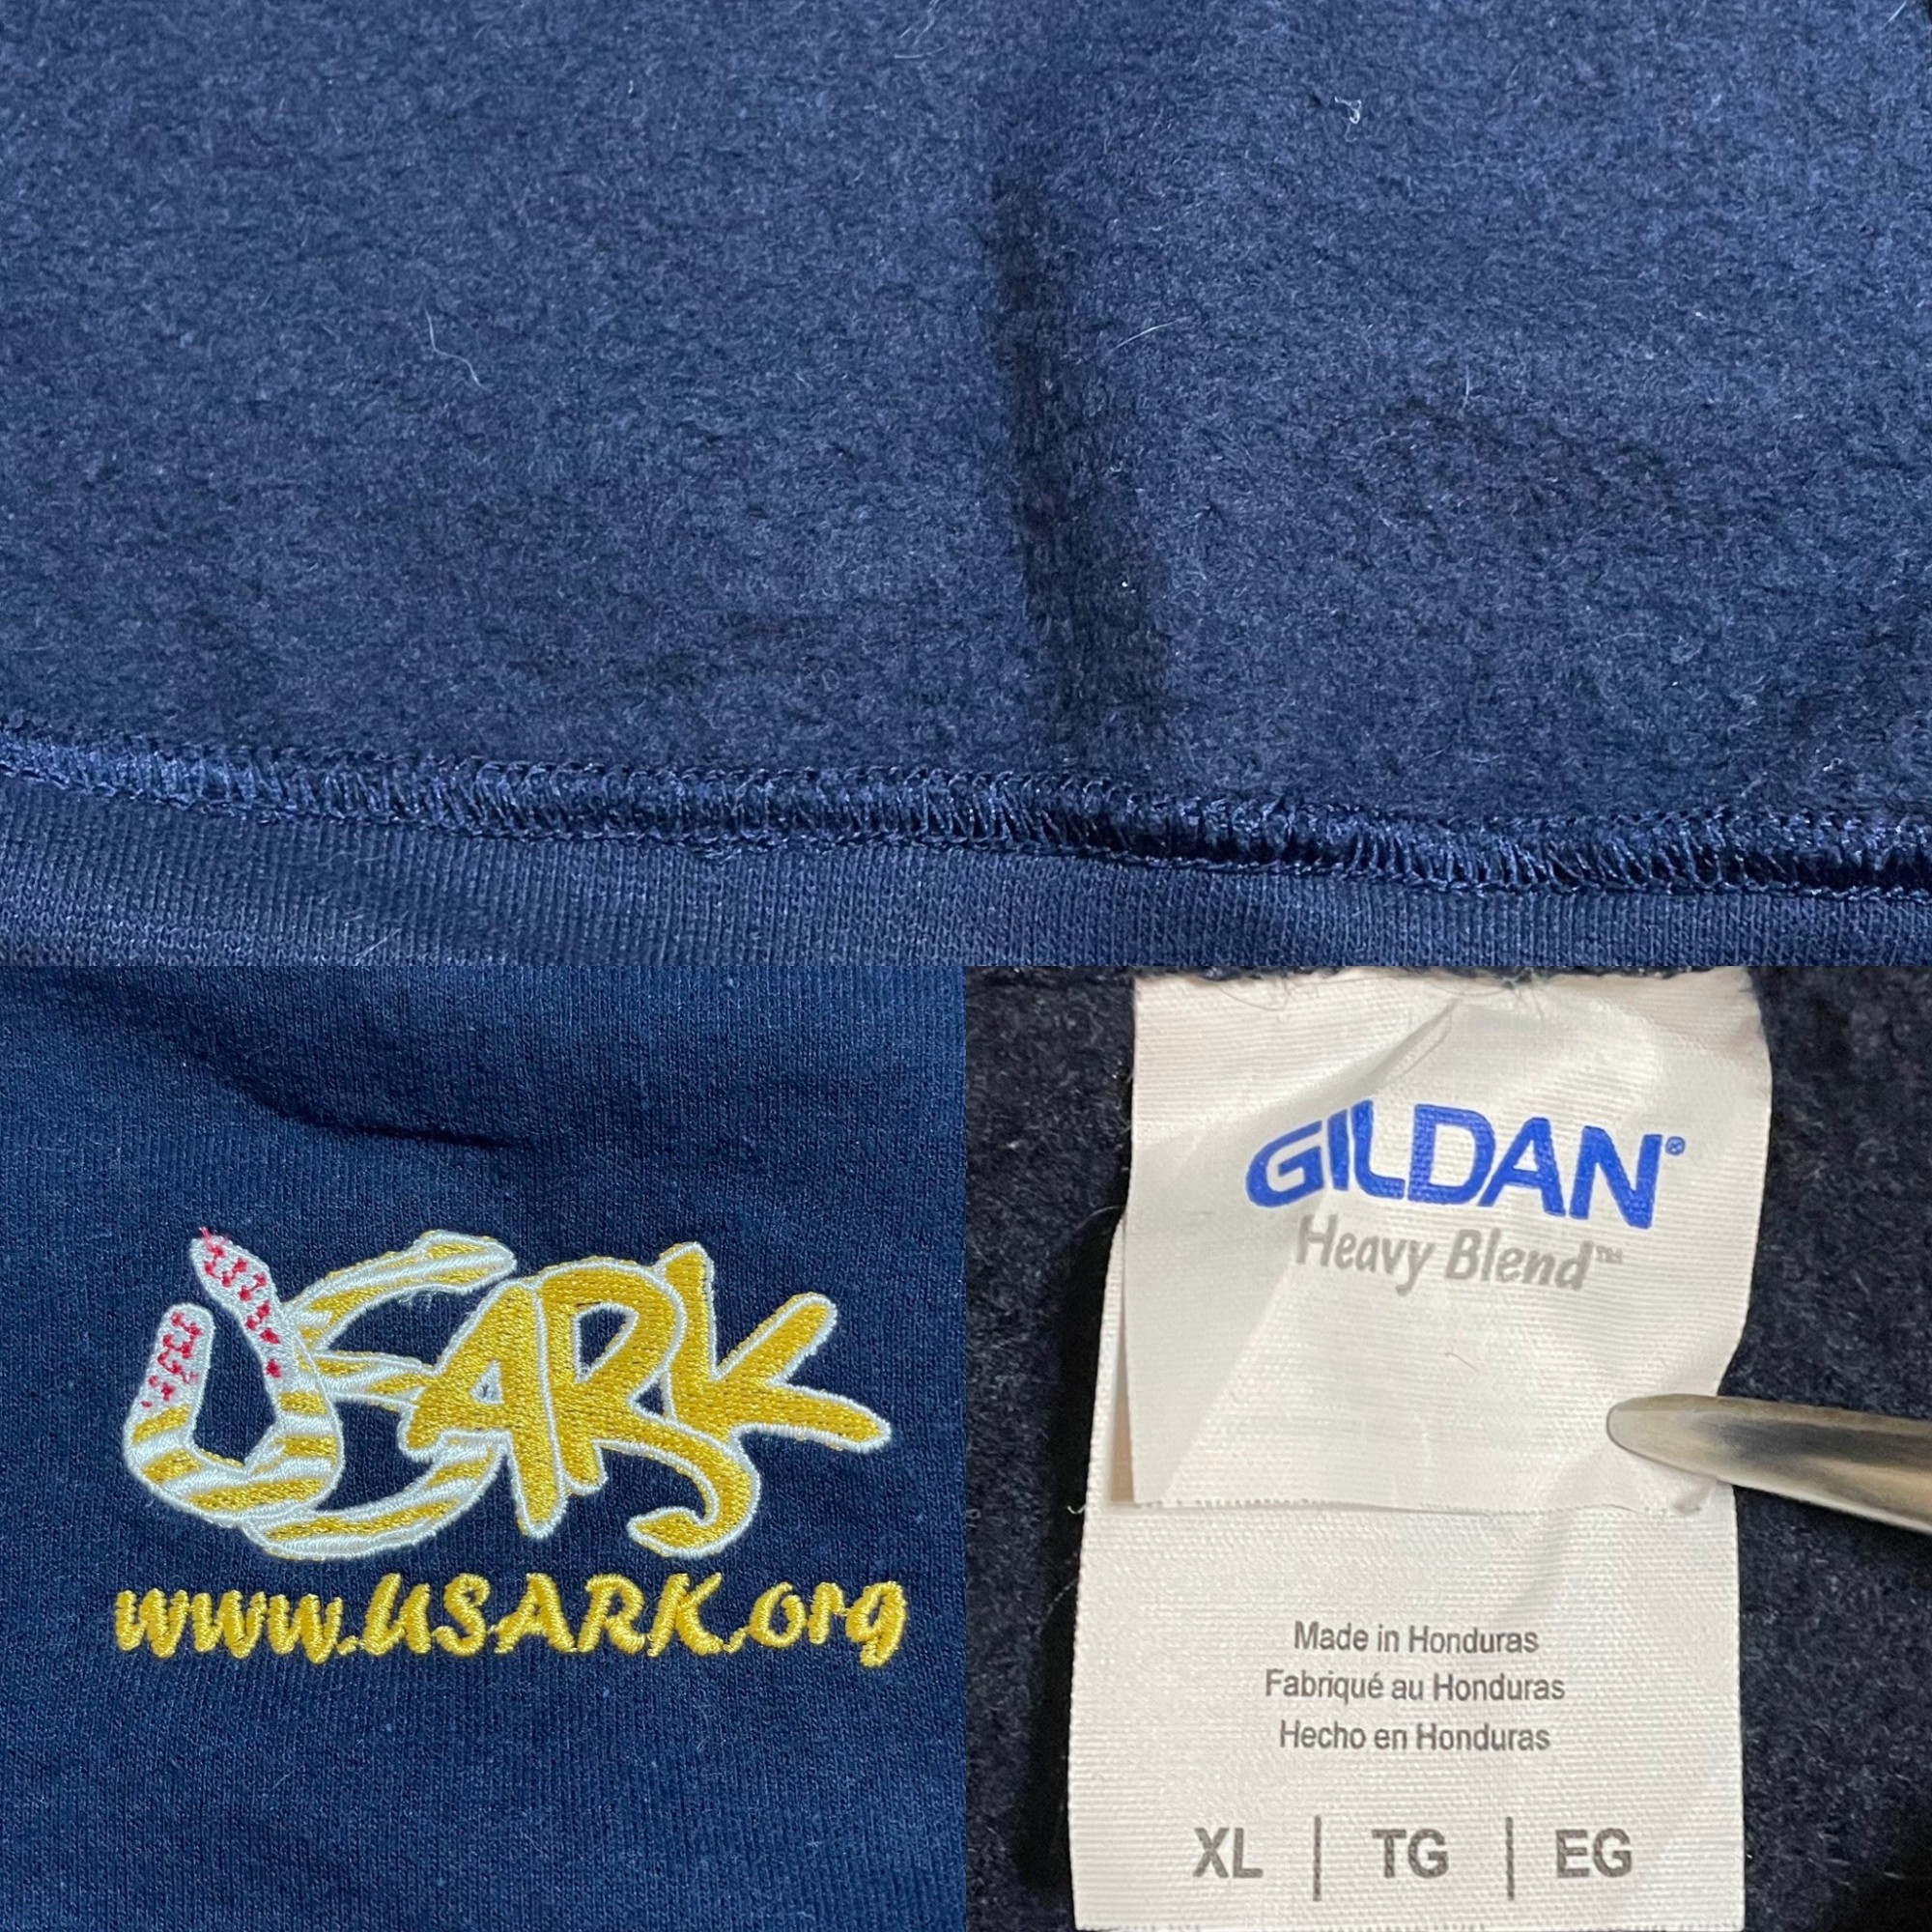 【GILDAN】USARK 刺繍 ロゴ パーカー ワンポイント XL US古着